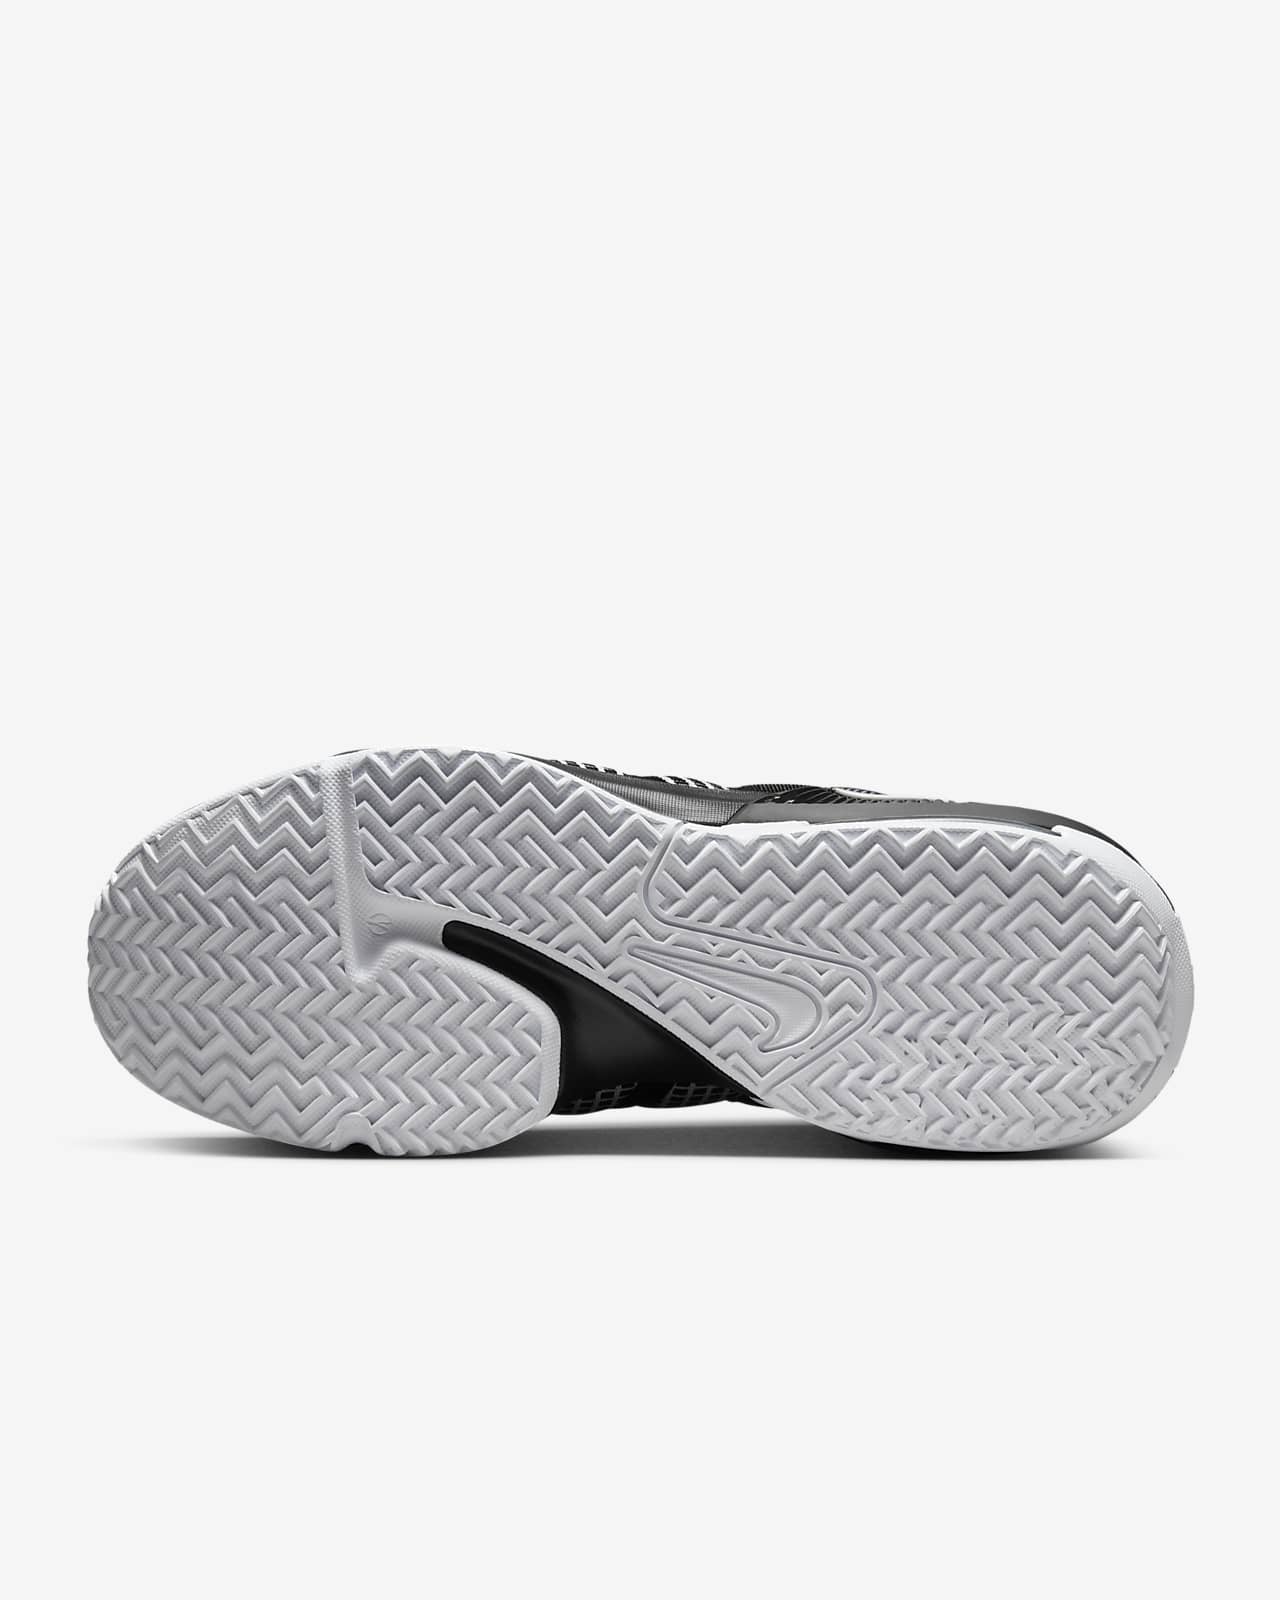 Nike LeBron Witness 7 Men's Basketball Shoes, Size: 12, White